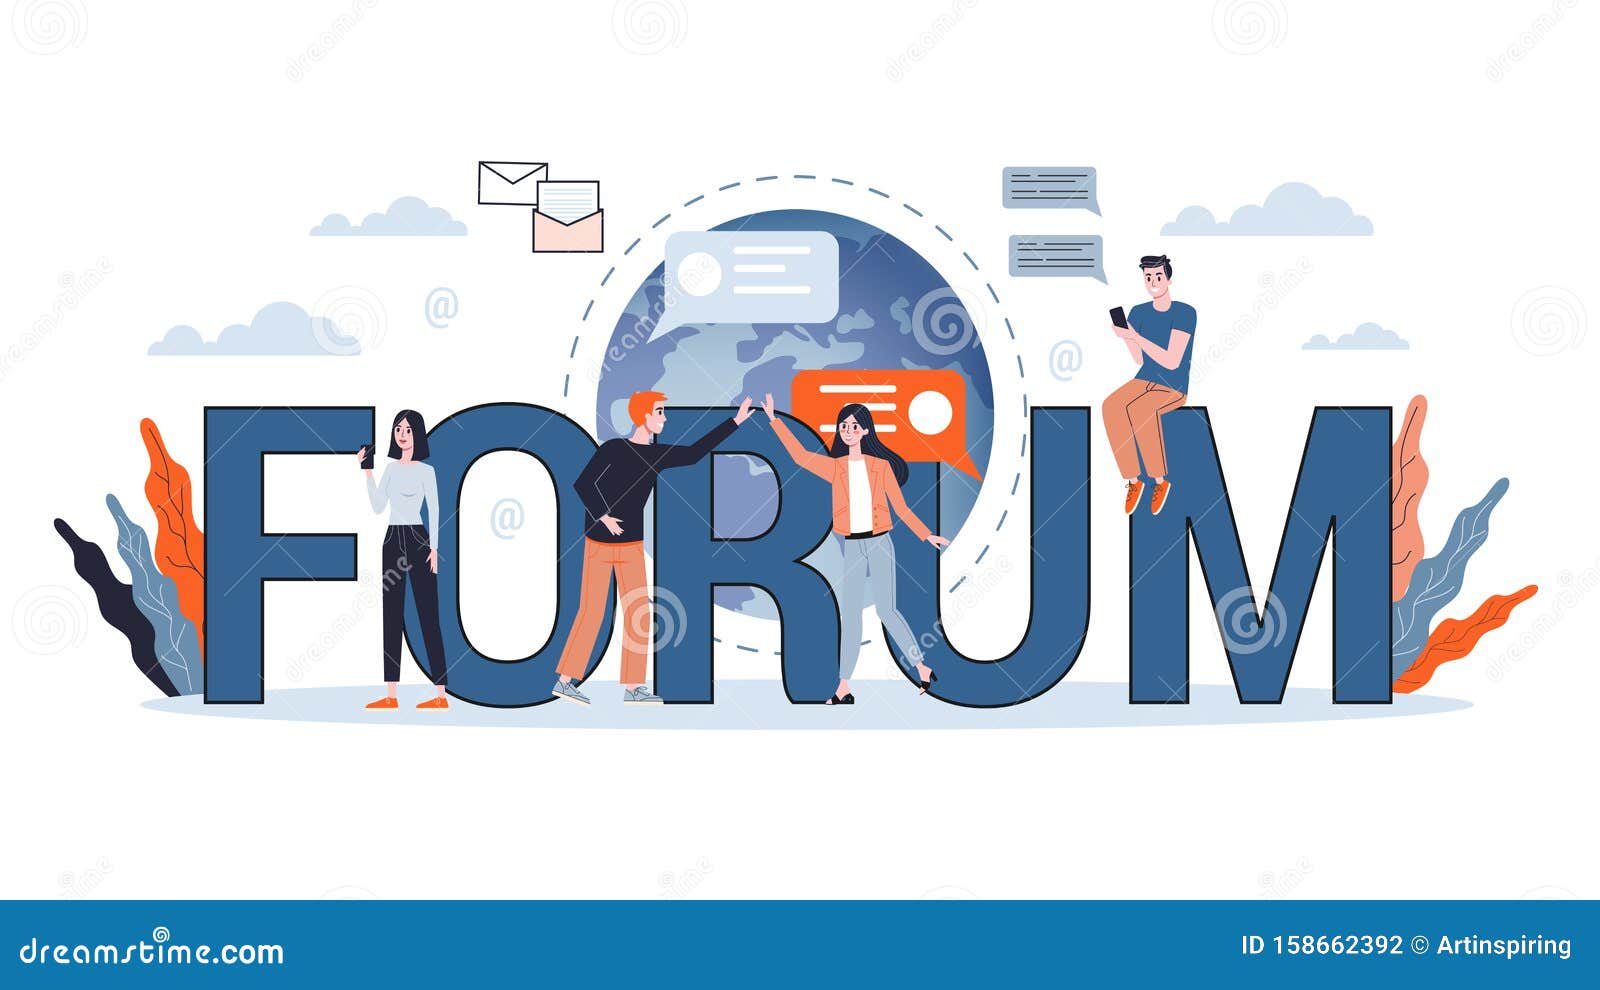 Forum Official 1C